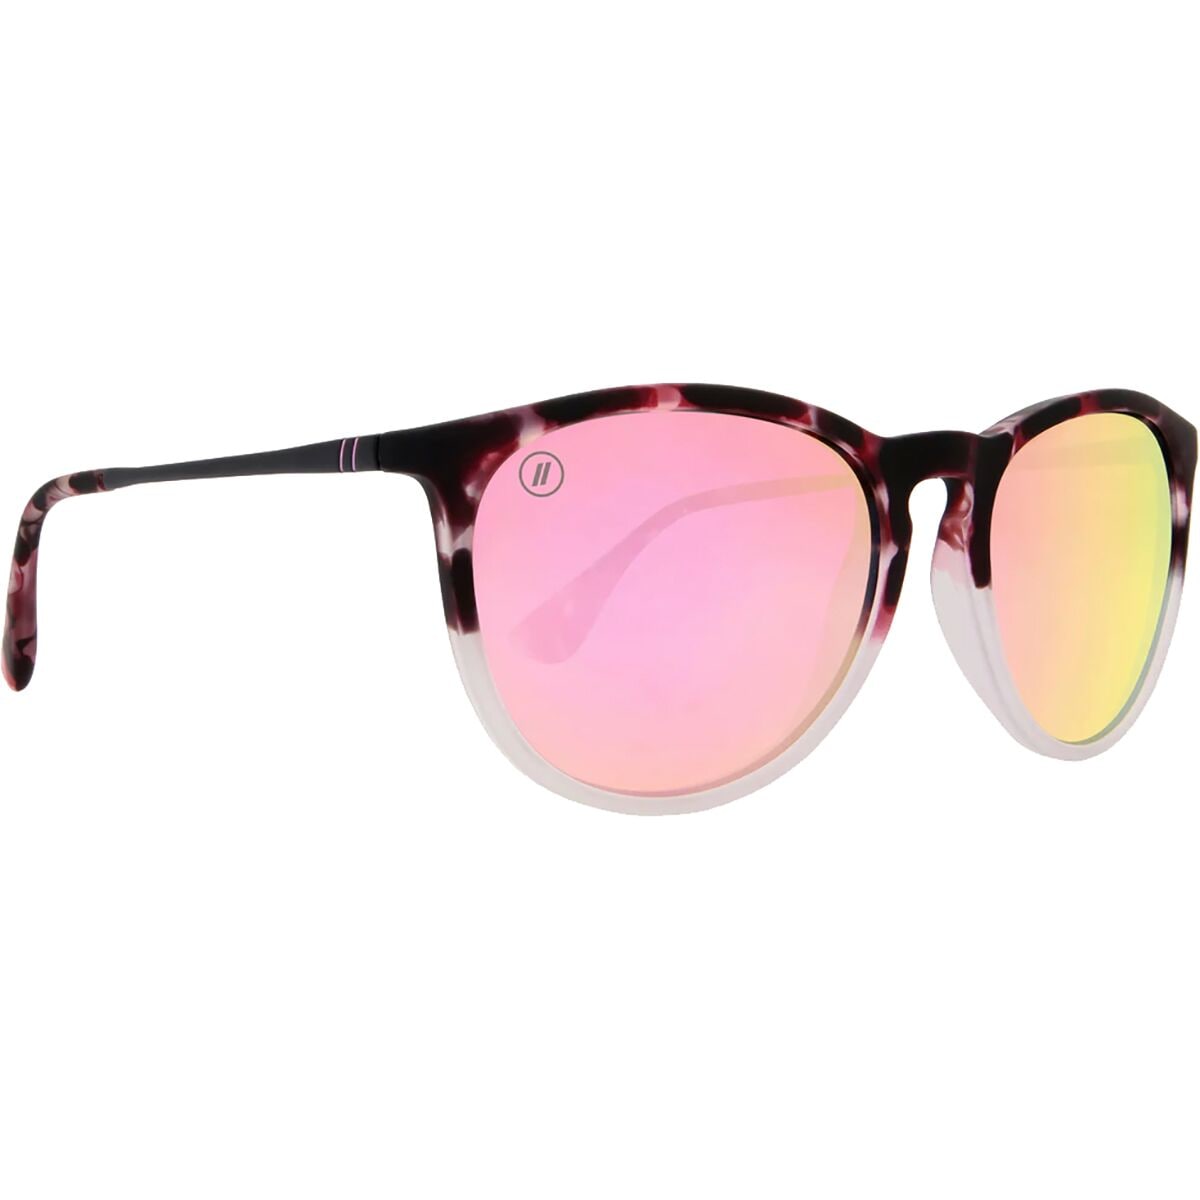 Blenders Eyewear Nina Davina North Park Polarized Sunglasses - Women's